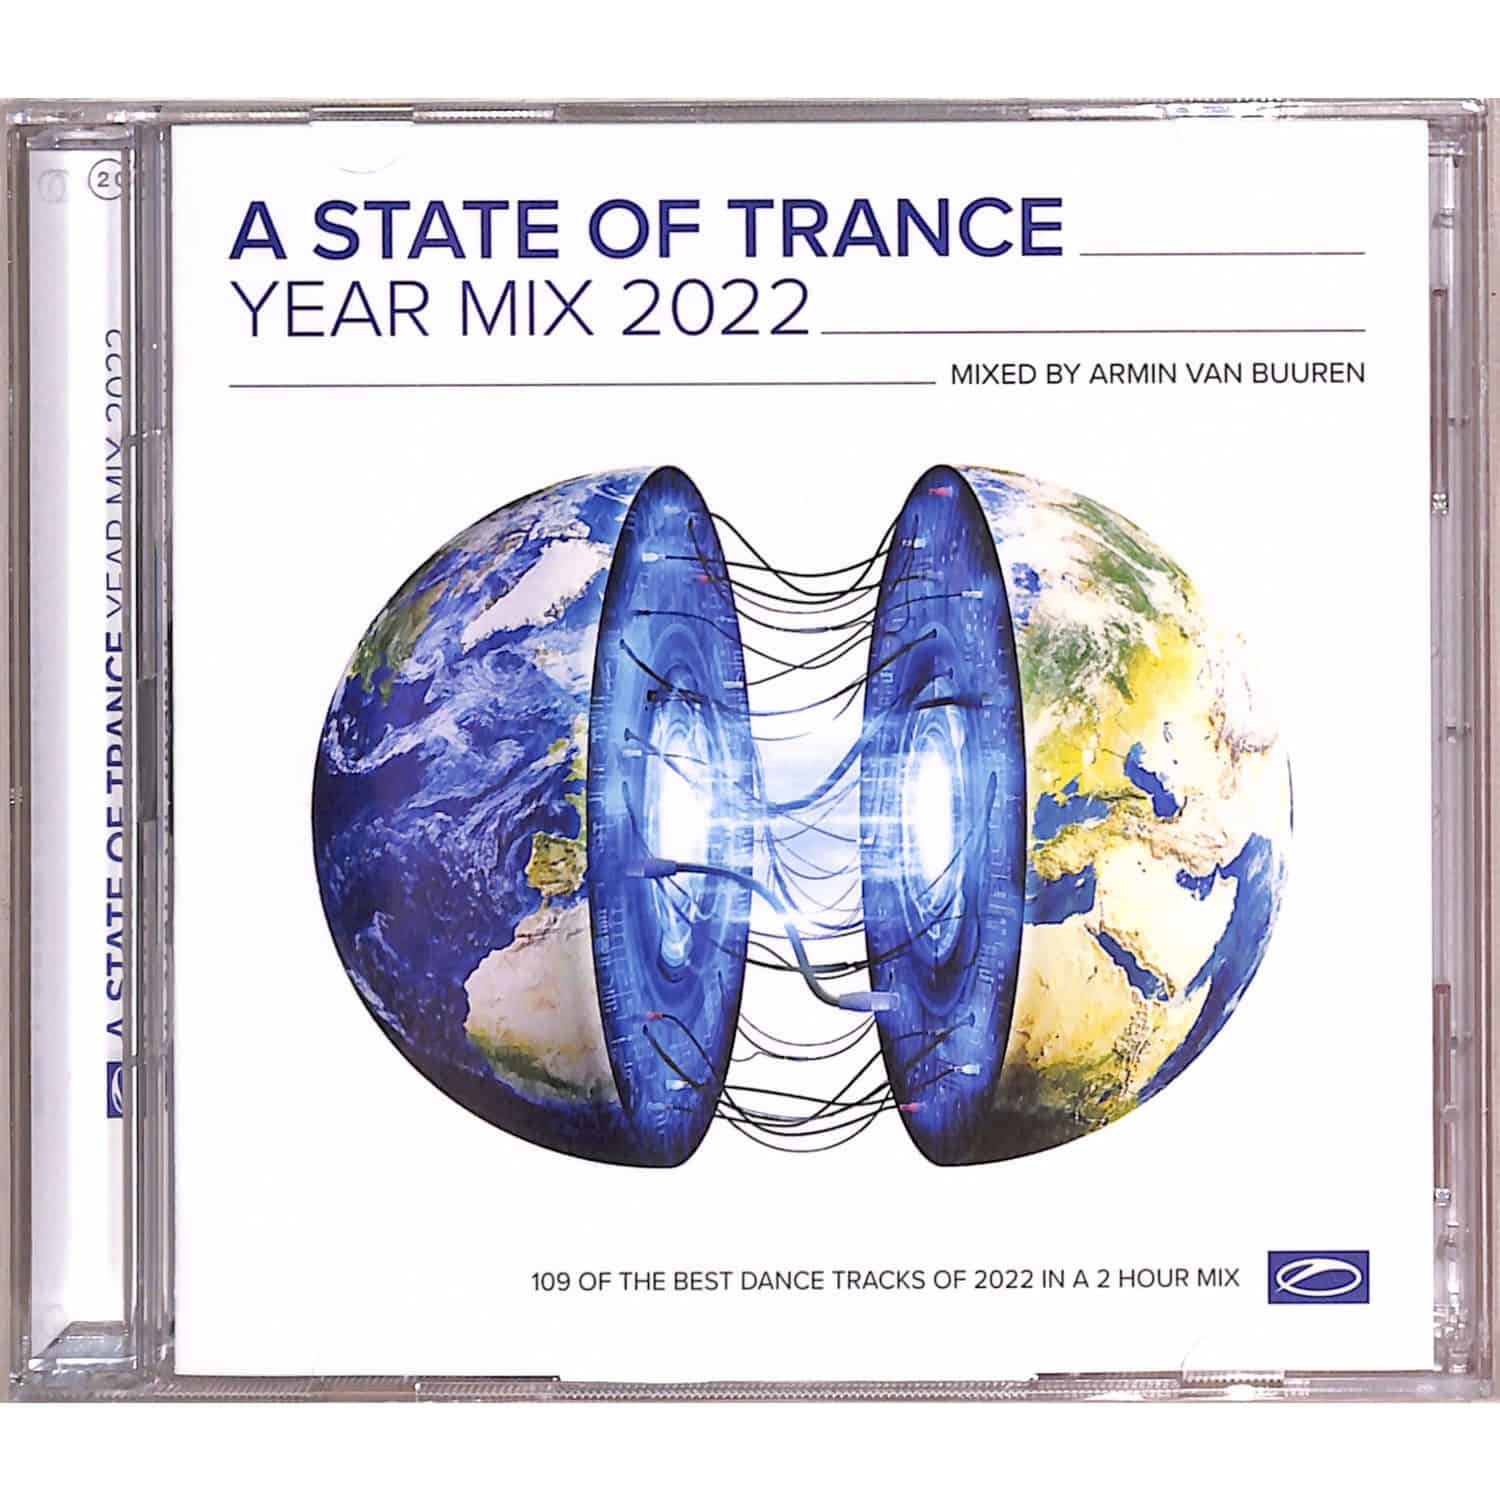 Armin van Buuren - A STATE OF TRANCE YEARMIX 2022 